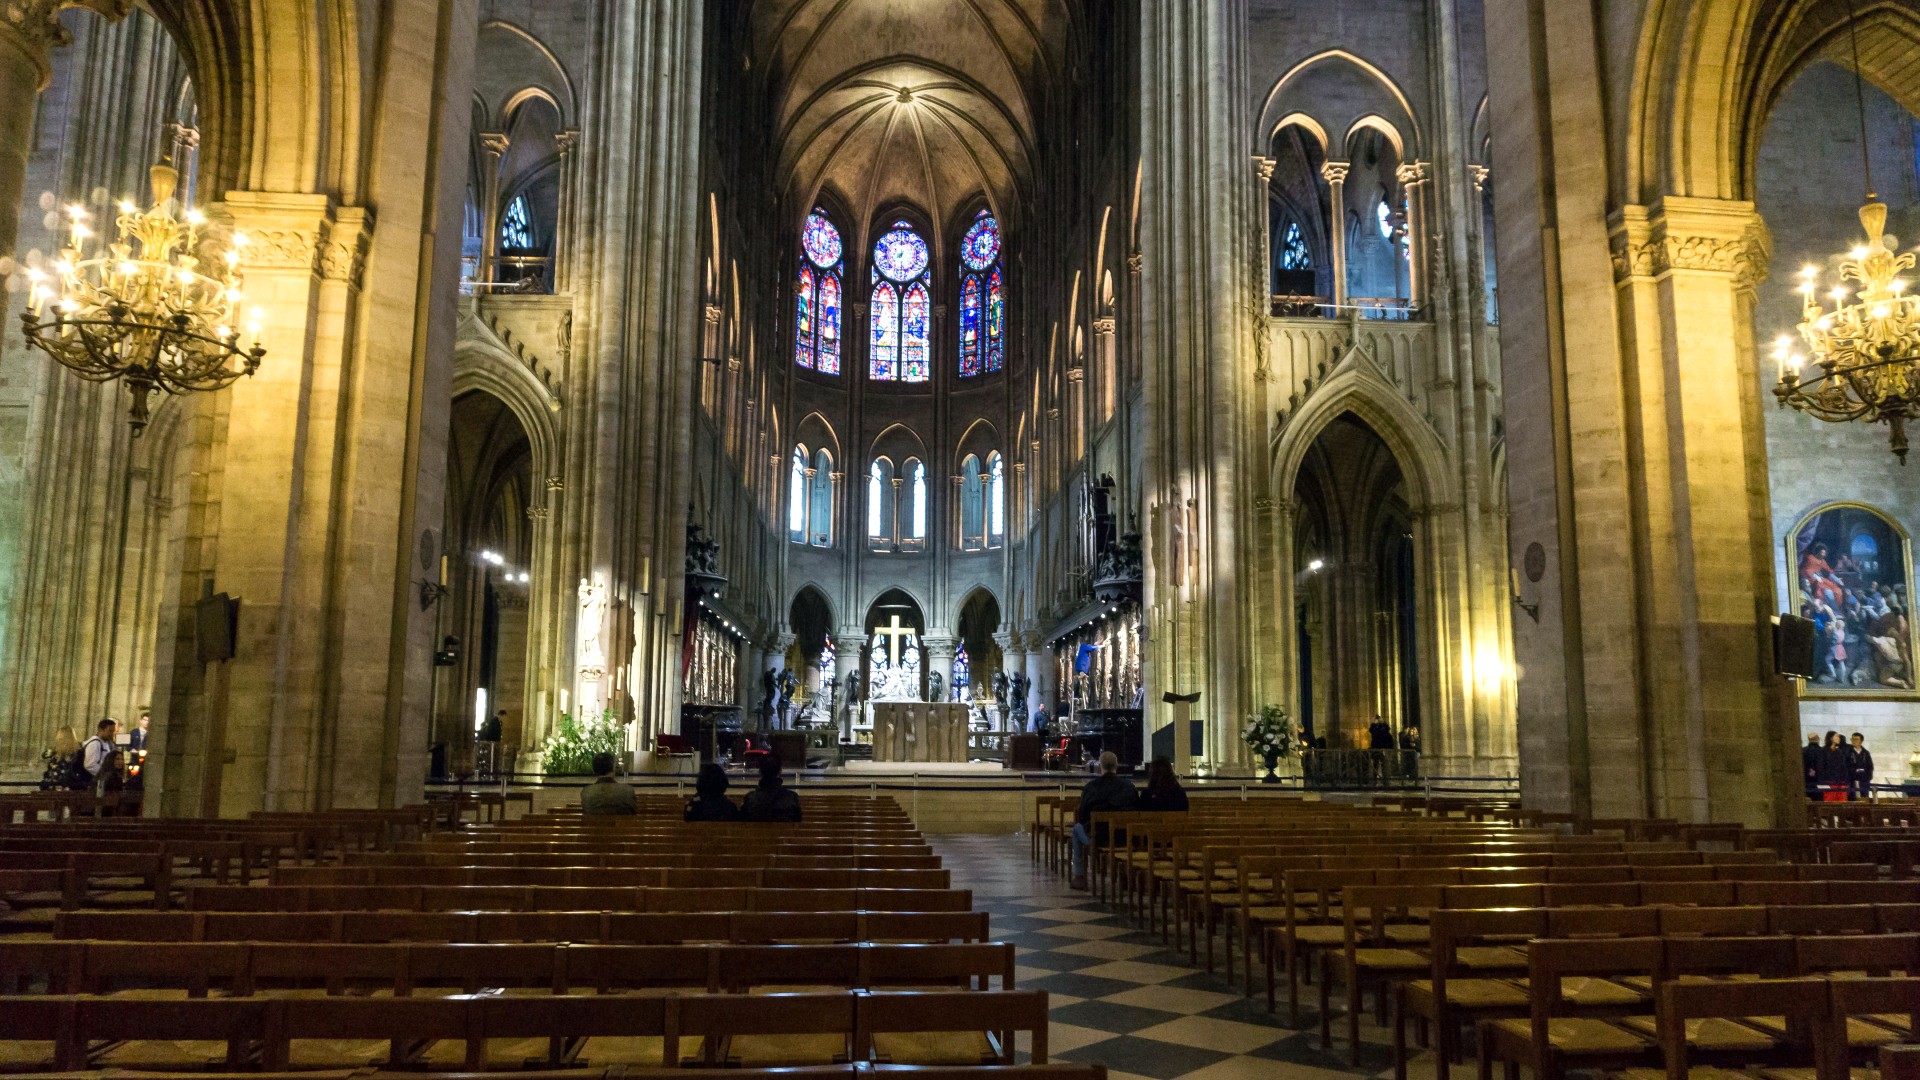 picture: Den parisiske katedralen for de rike, benk, skive, Frankrike (image)